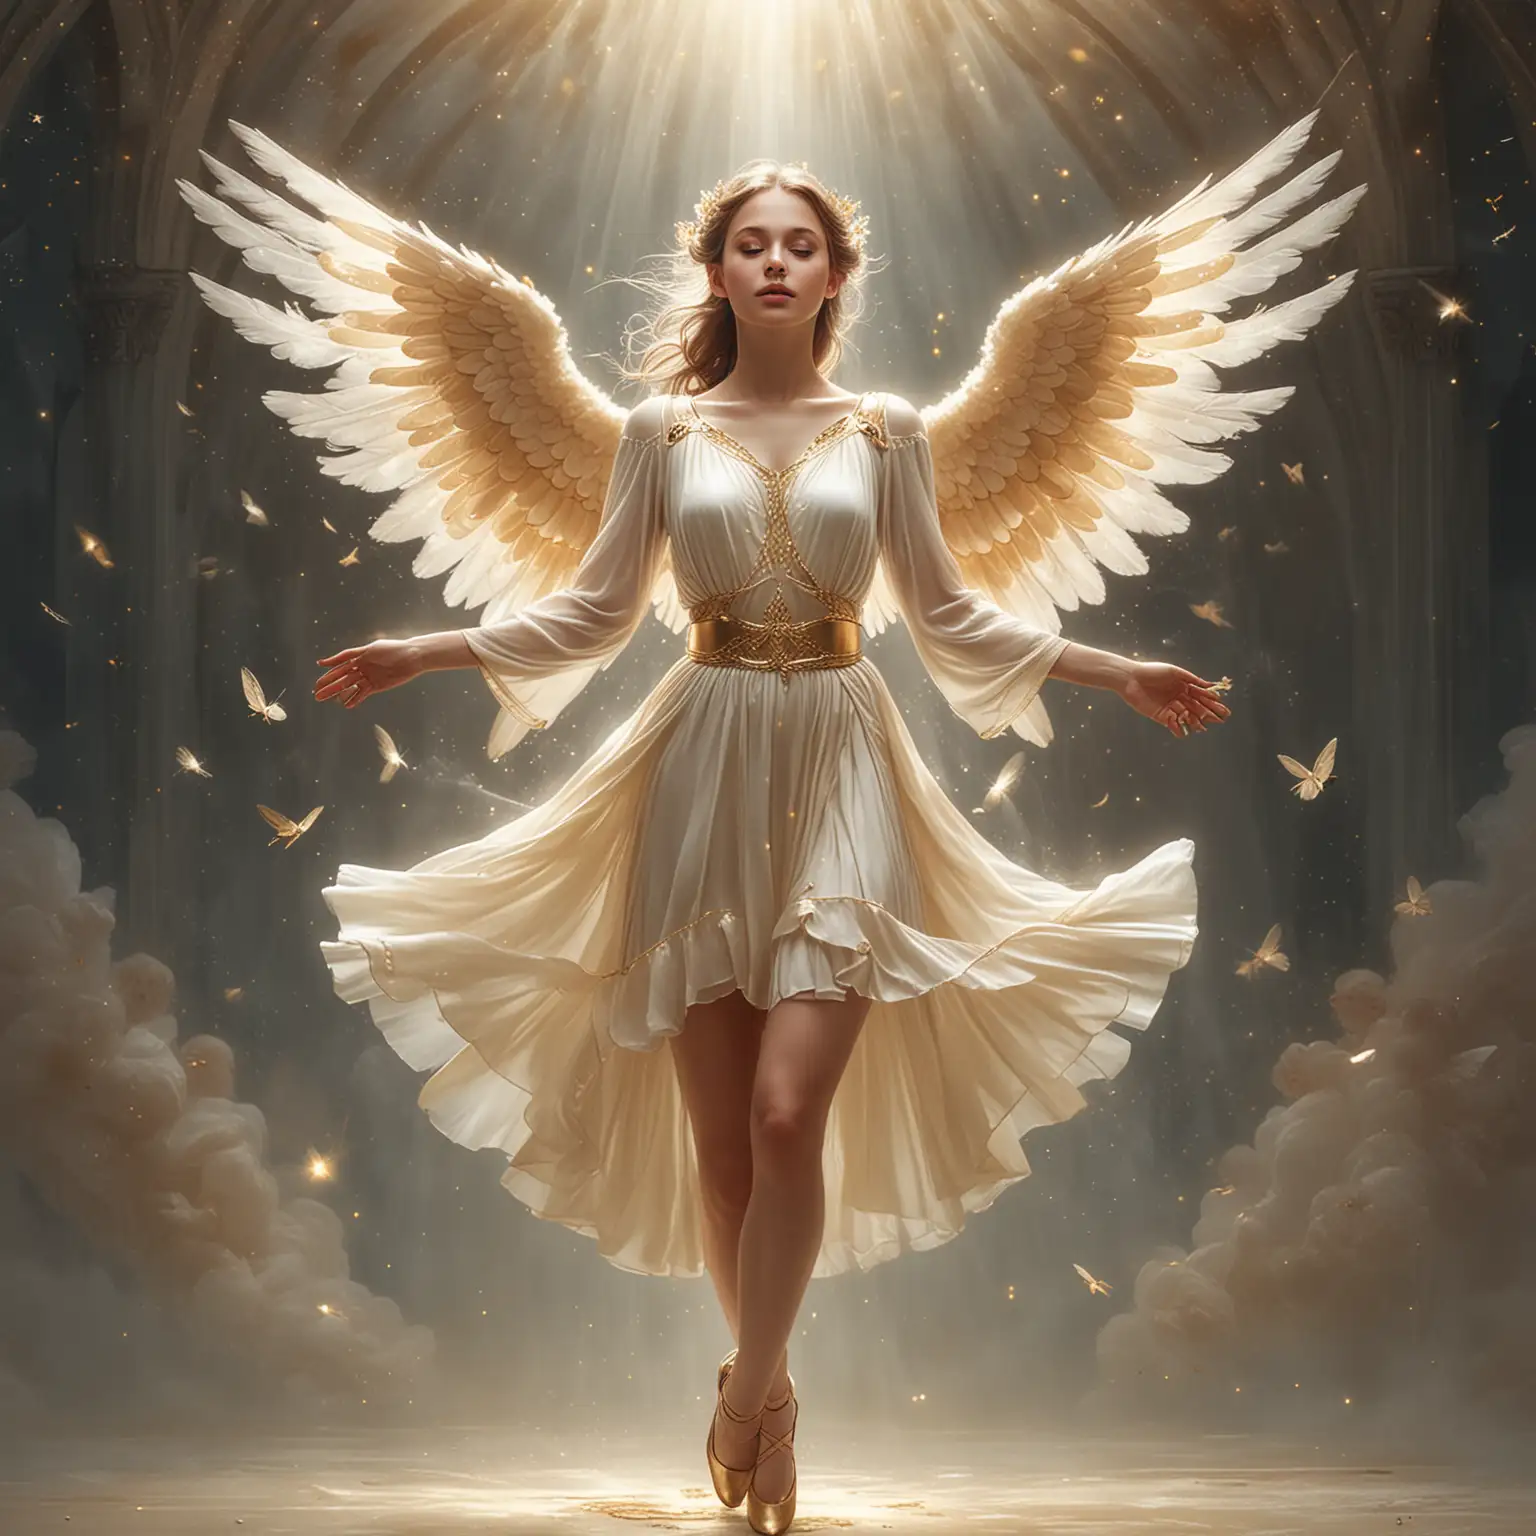 Mystical Guardian Angel in Golden Attire Digital Art